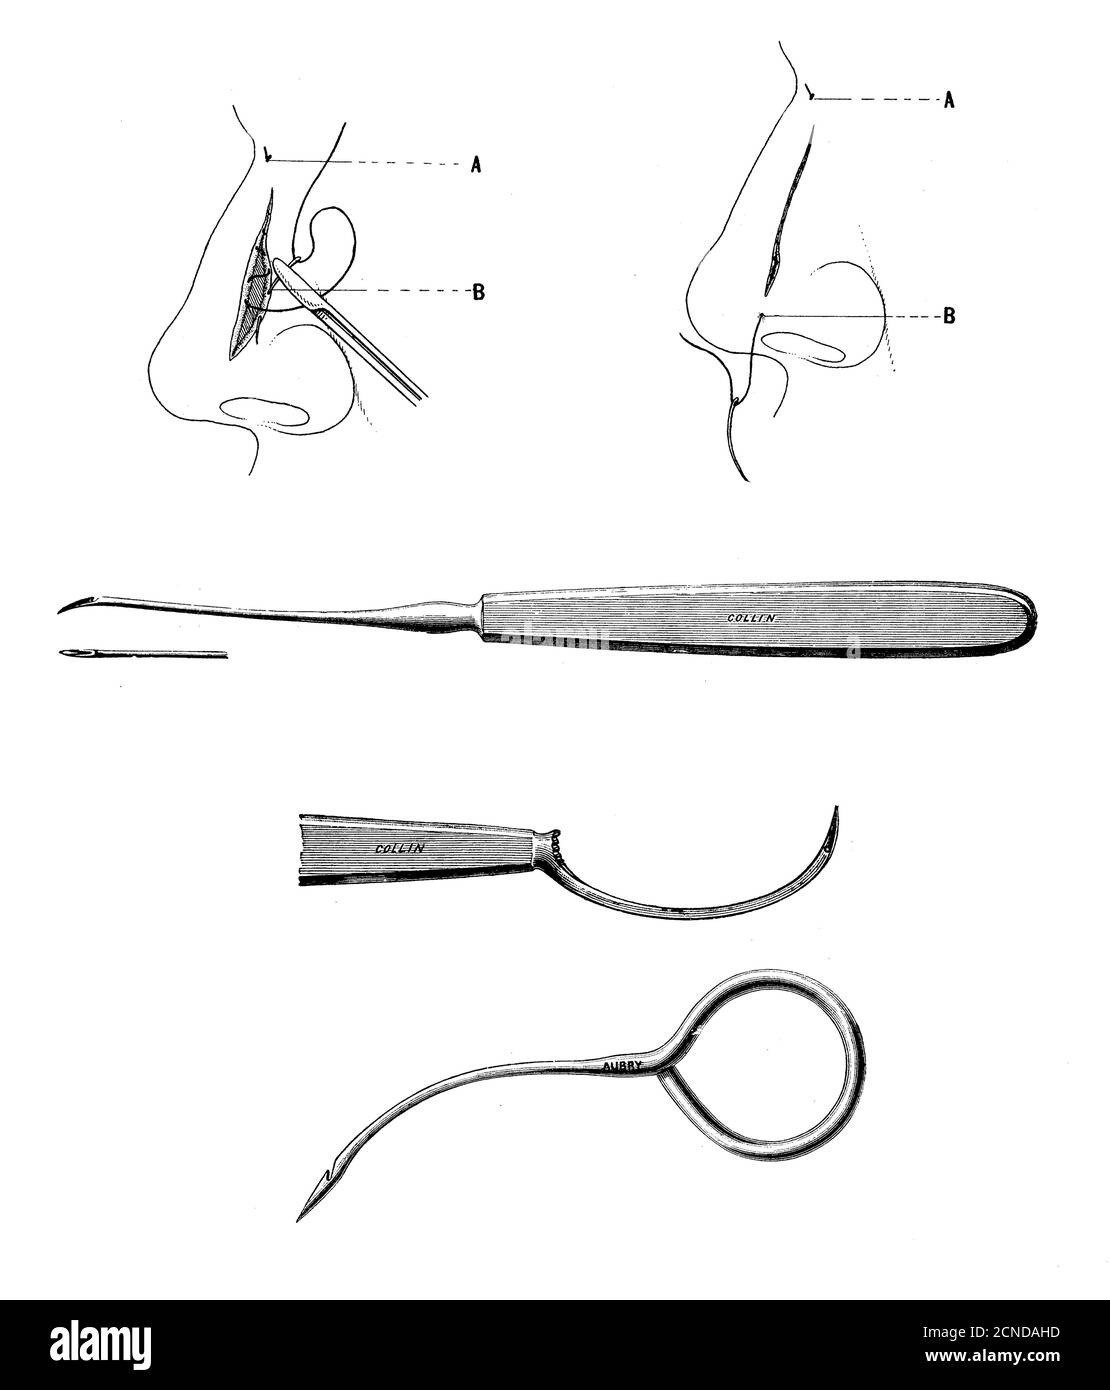 Healthcare and medicine: intracutaneous suture tools, vintage illustration Stock Photo